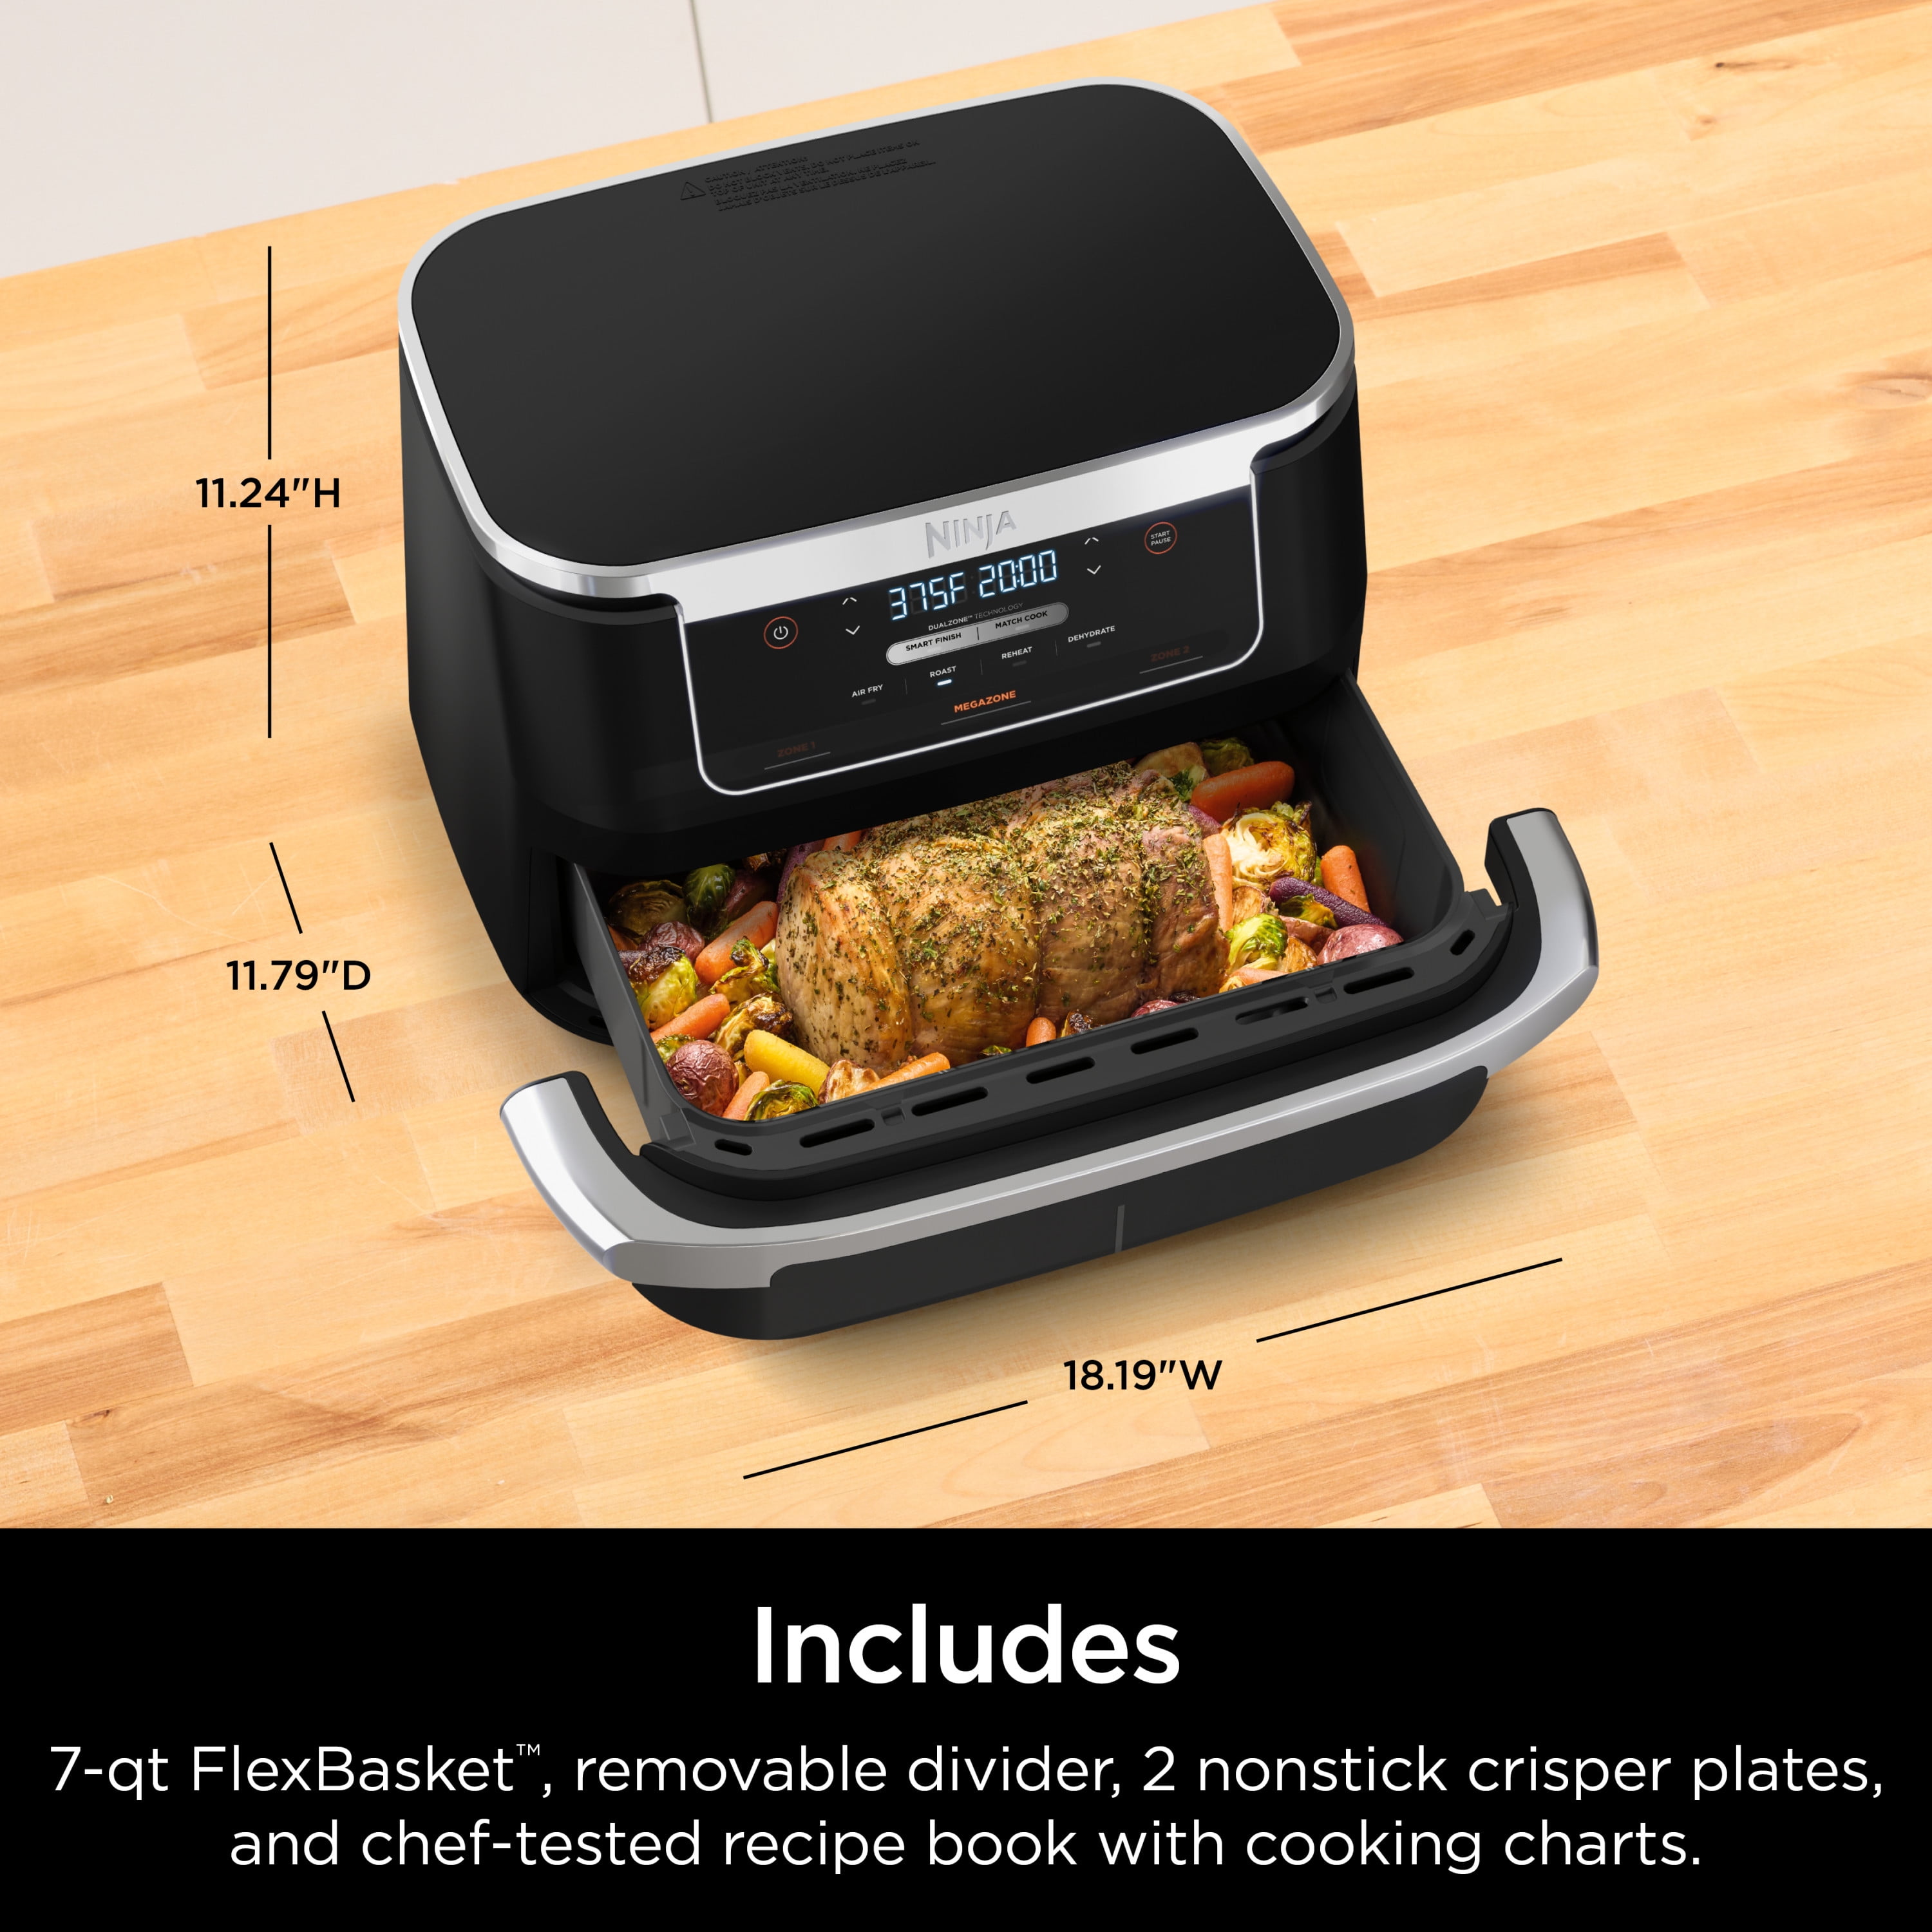 Ninja Foodi DualZone FlexBasket Air Fryer with 7-qt MegaZone Black DZ071 -  Best Buy